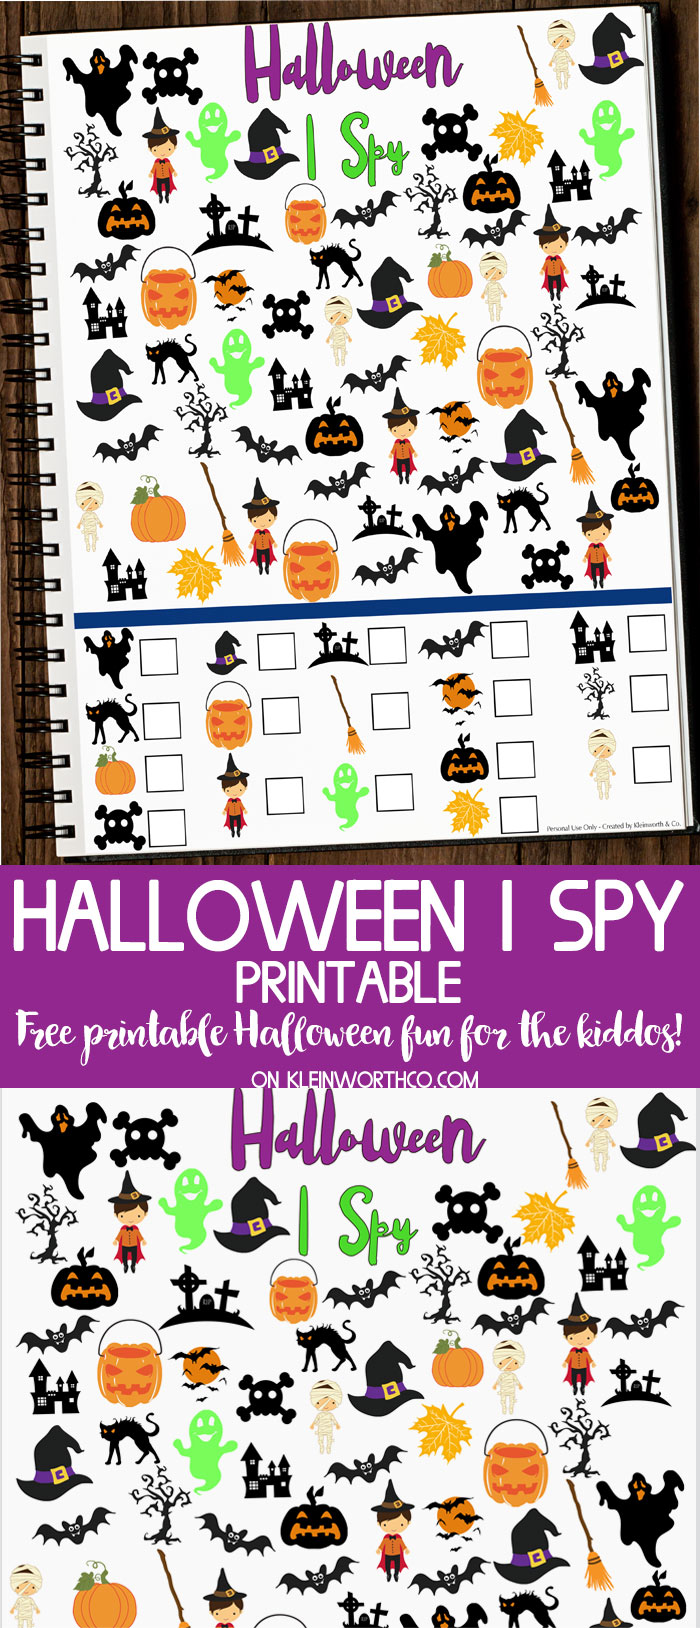 Free Halloween I Spy Printable for kids